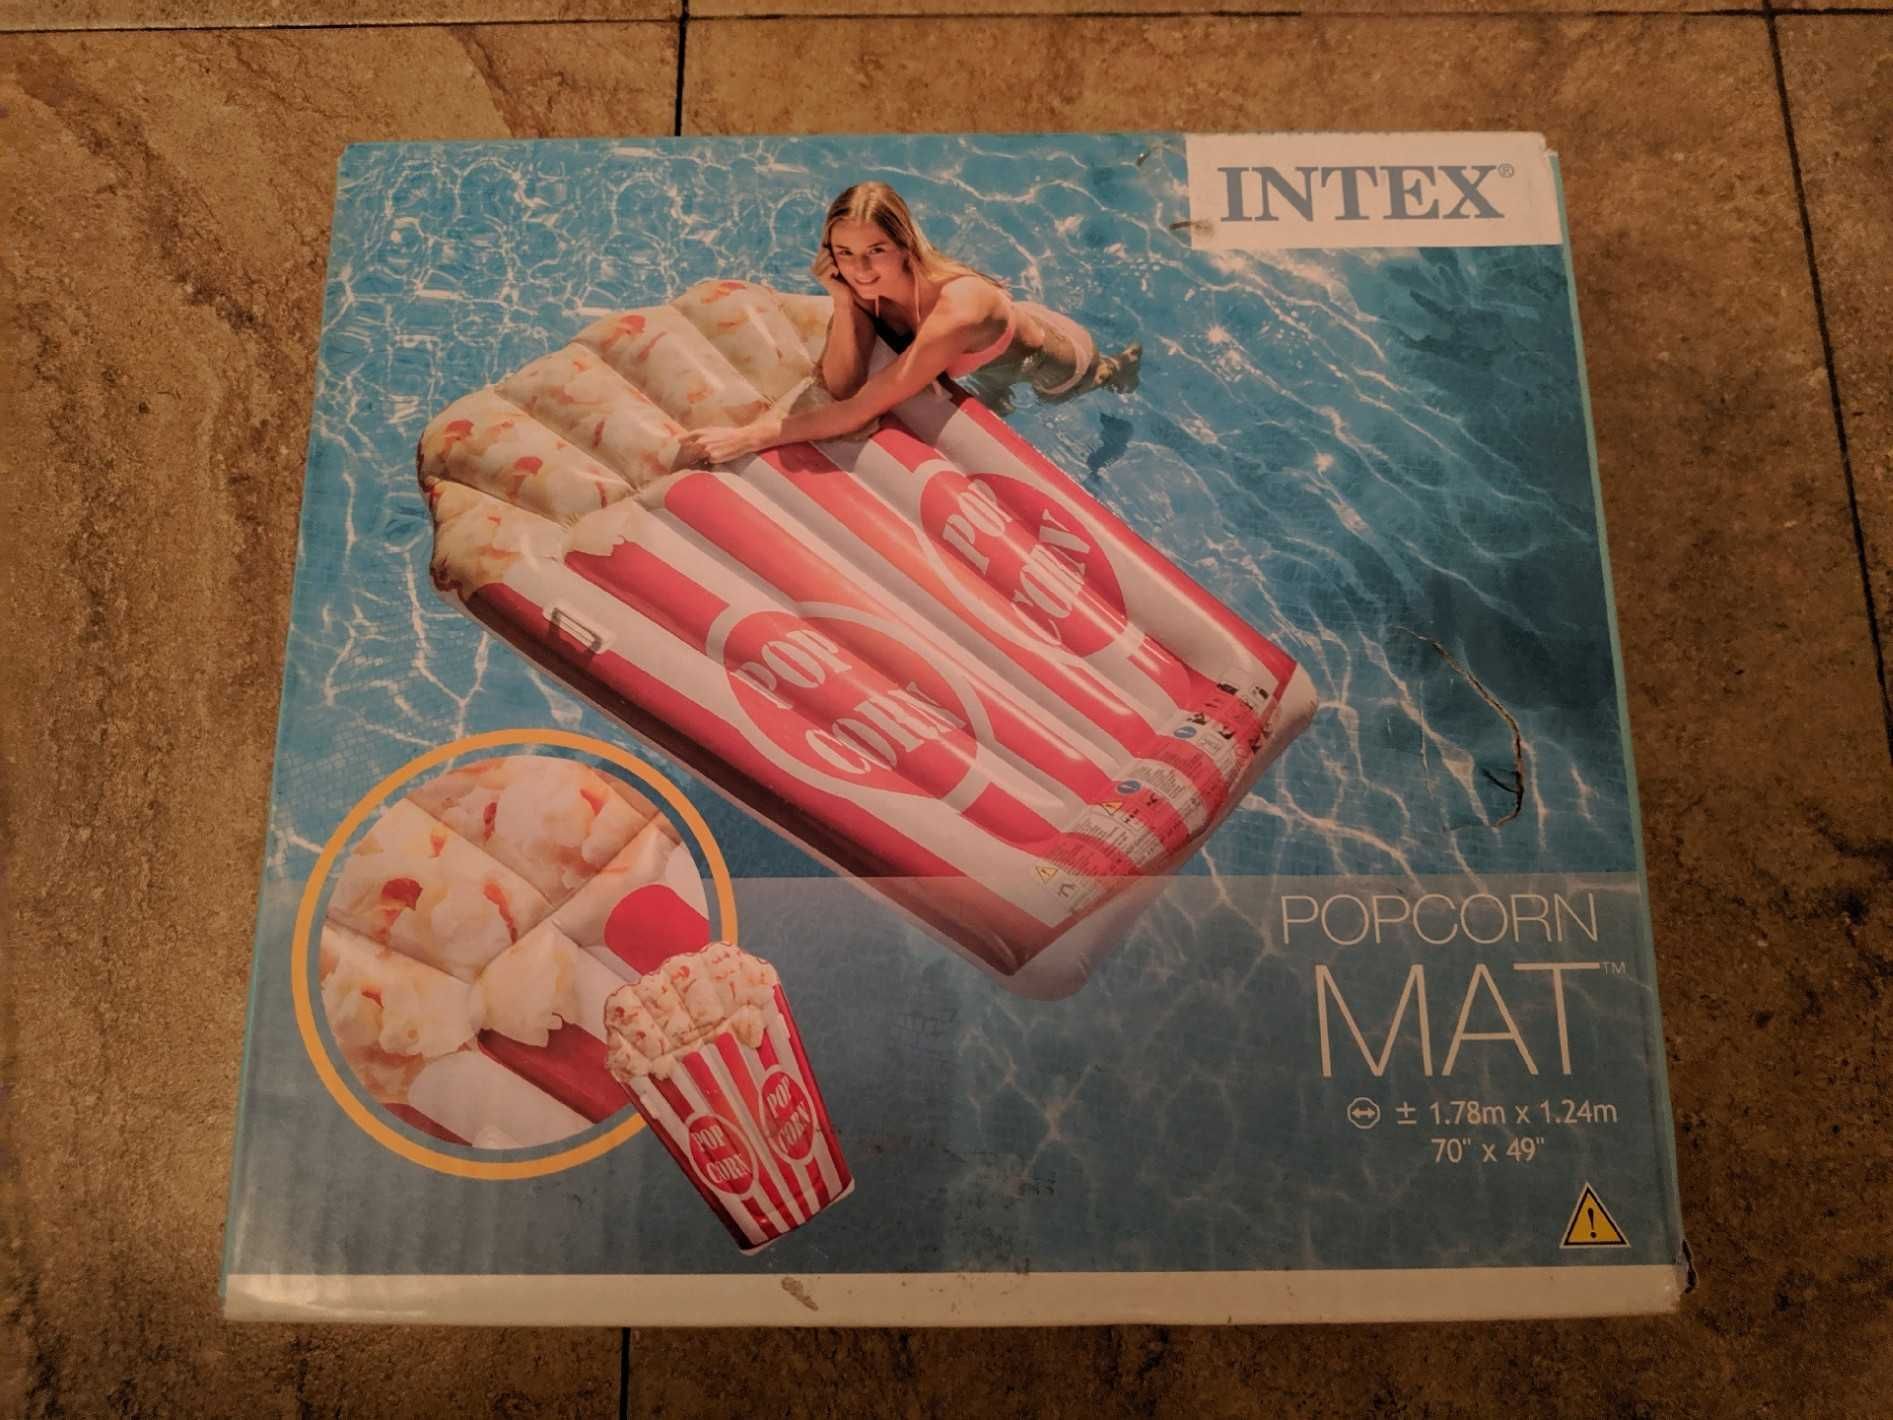 Saltea gonflabila de plaja INTEX in forma de popcorn noua la cutie